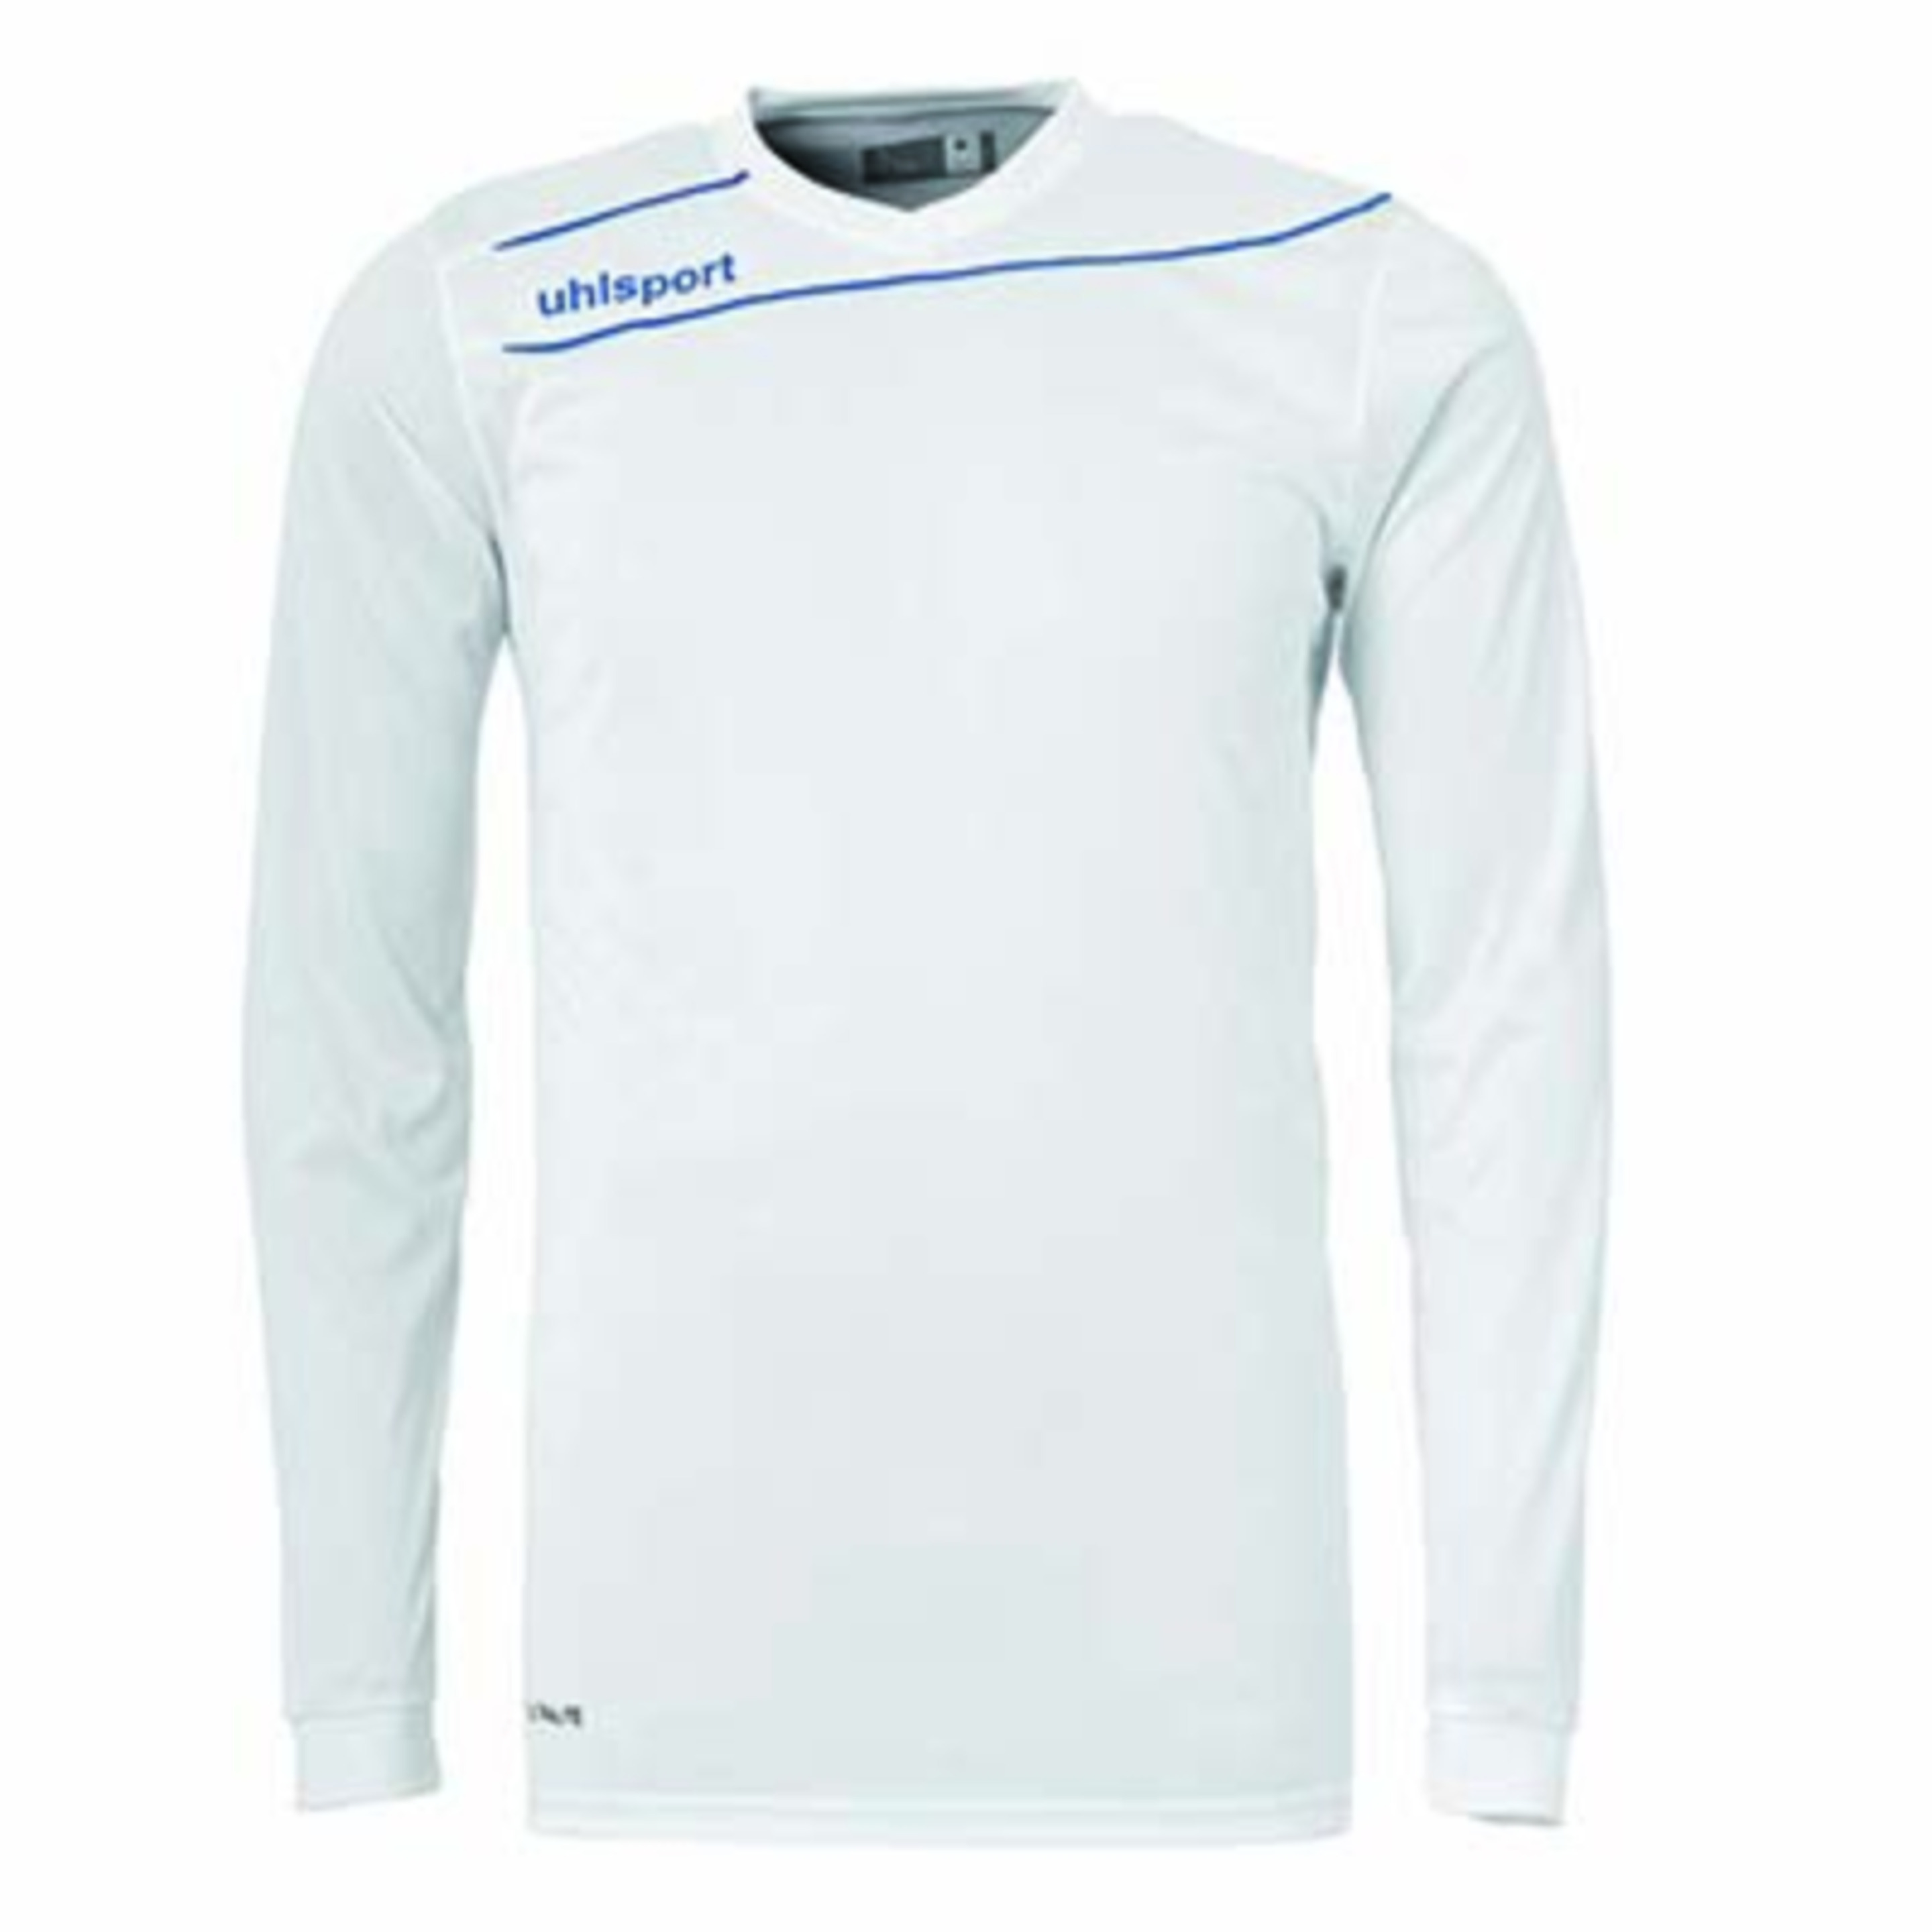 Stream 3.0 Camiseta Ml Blanco/azur Uhlsport - blanco-azul - 